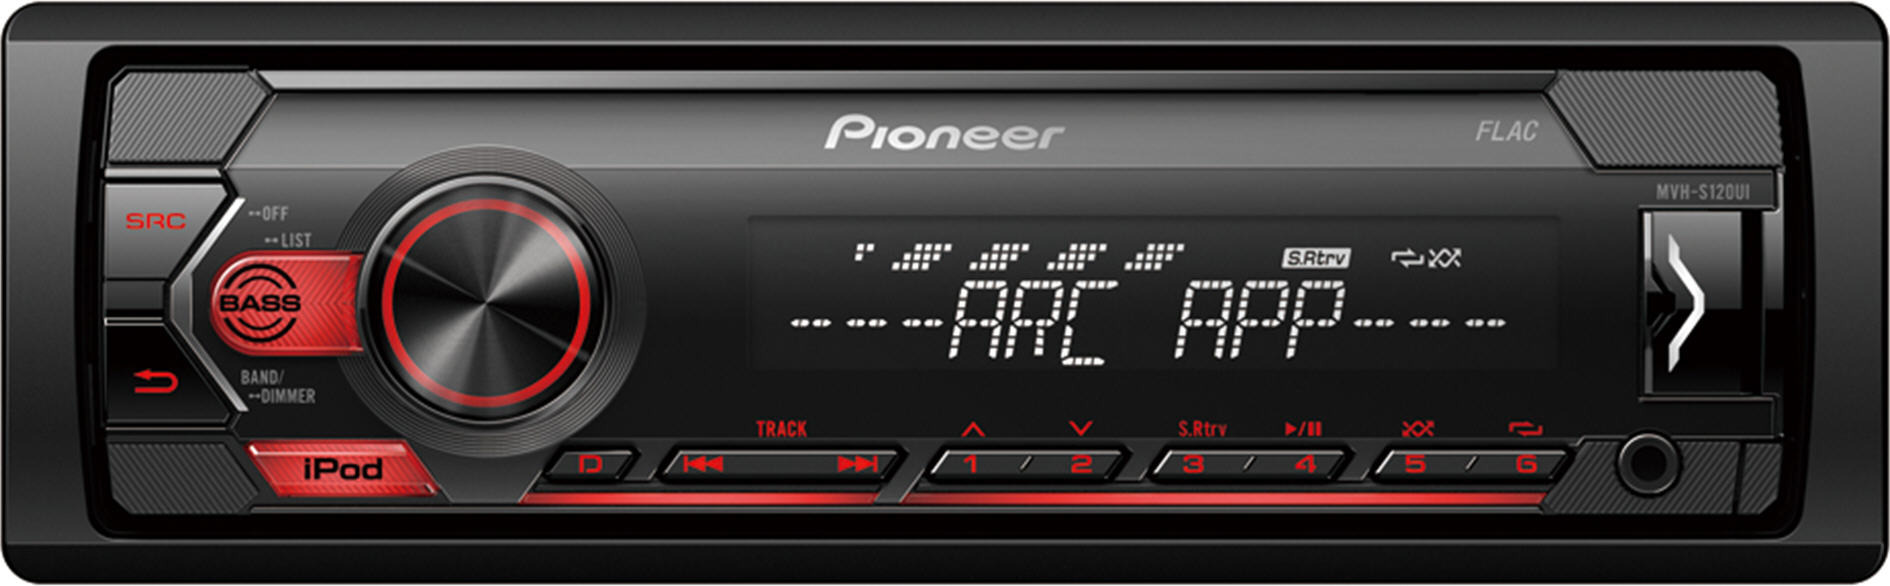 Pioneer Mp3/WMA/WAV/FLAC/USB/iPod lejátszó MVH-S120UI